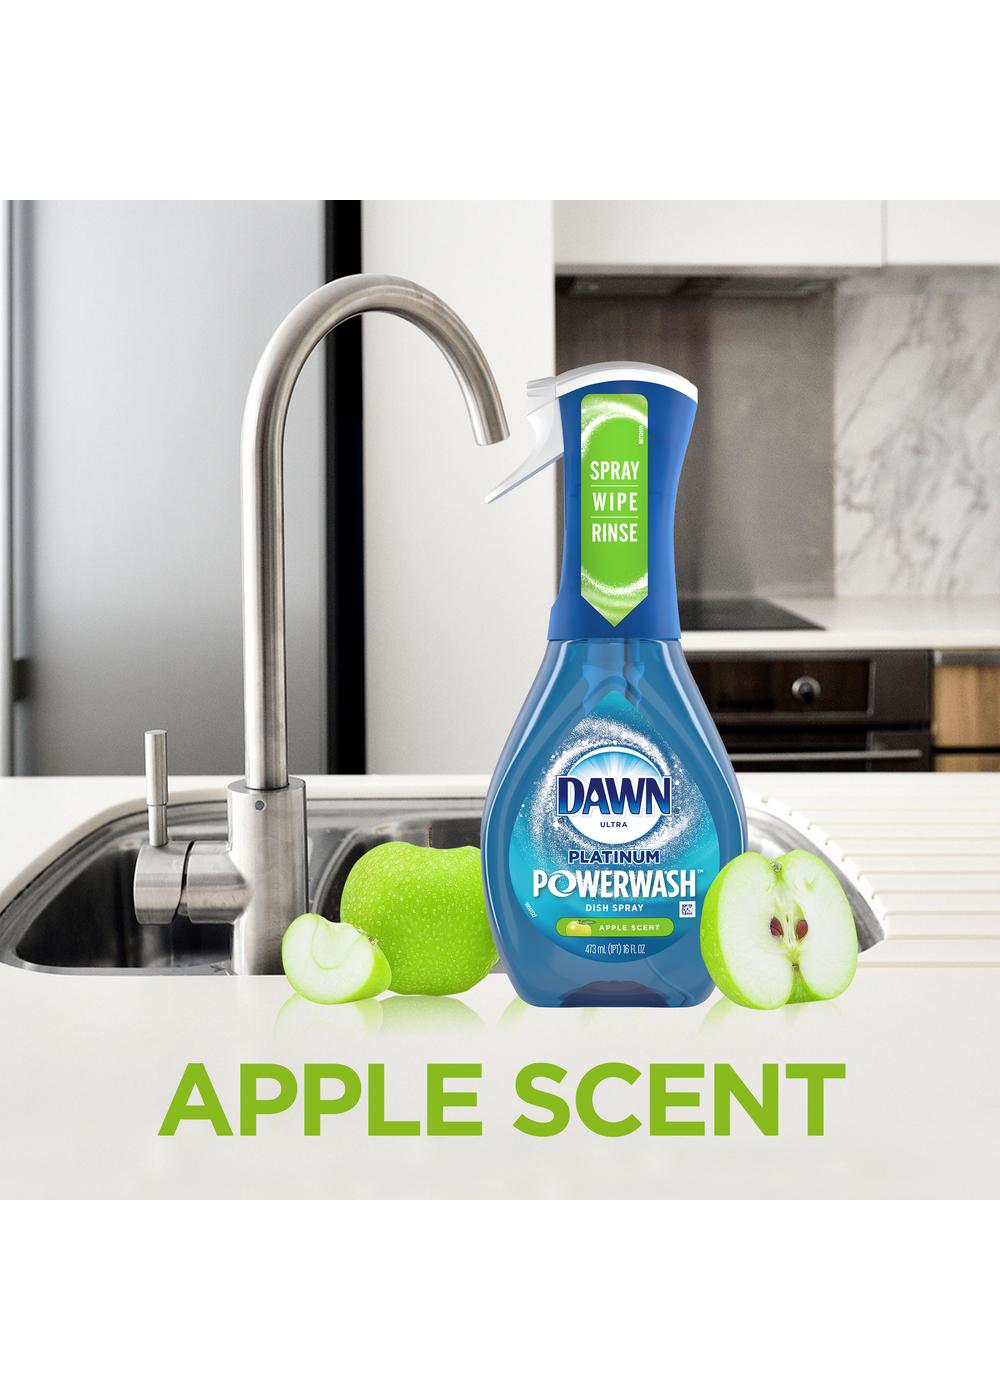 Dawn Powerwash Platinum Apple Scent Dish Spray; image 3 of 3